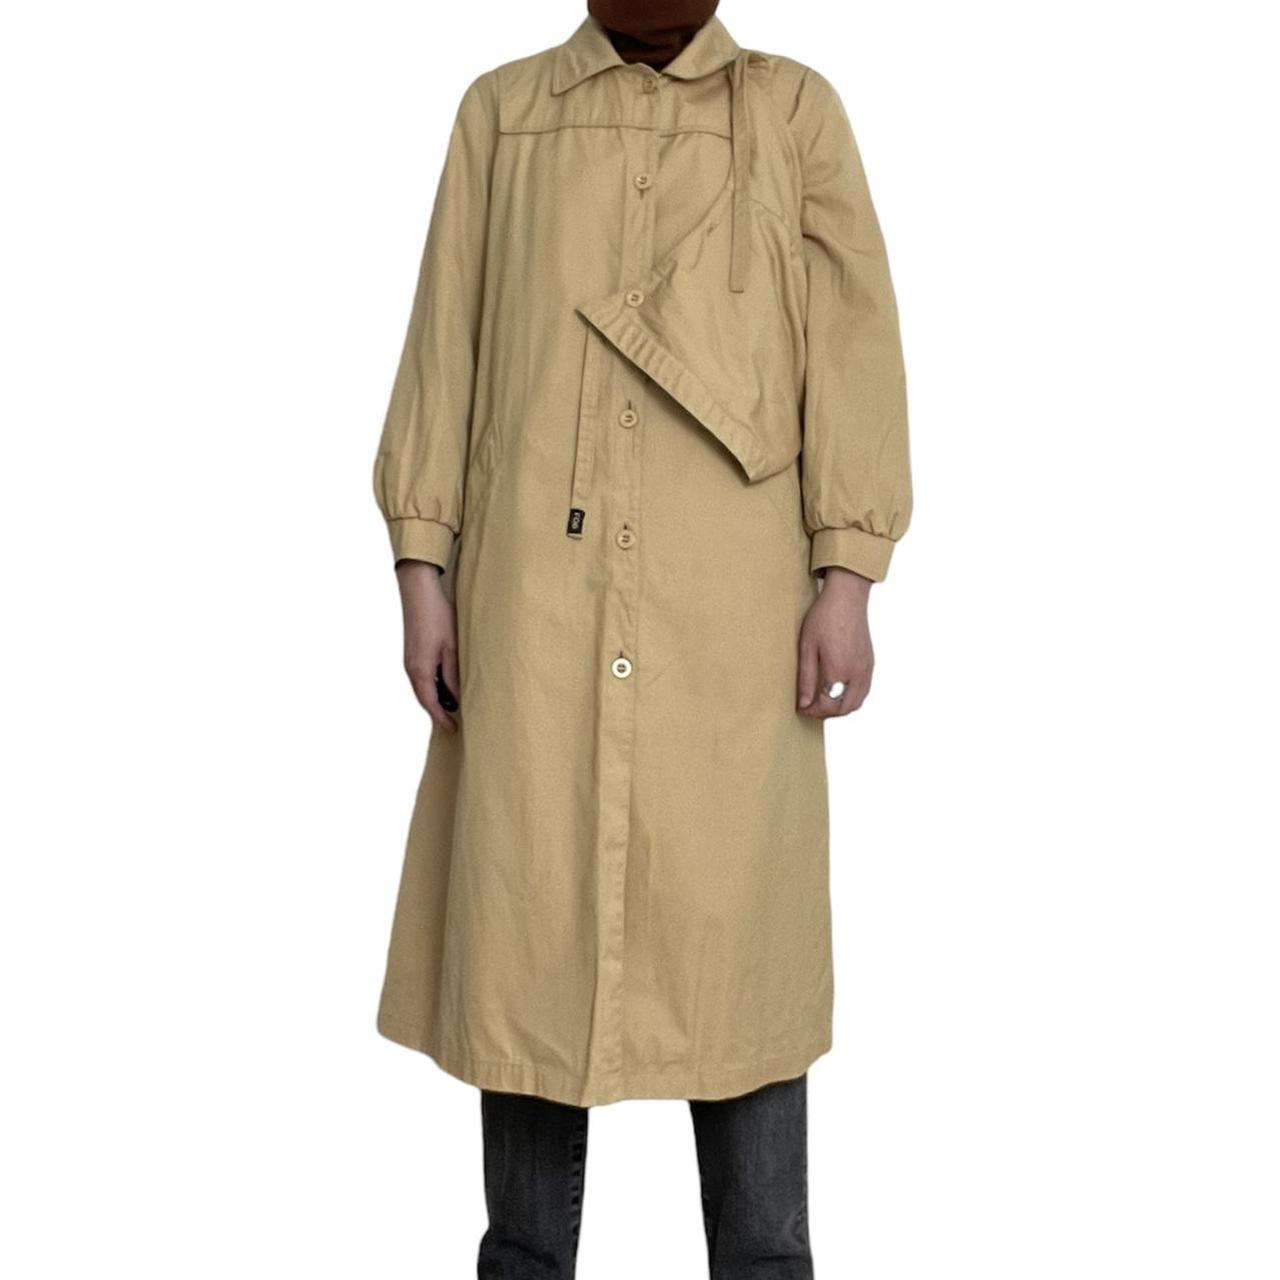 Vintage London Fog trench coat 🧥 with detachable... - Depop